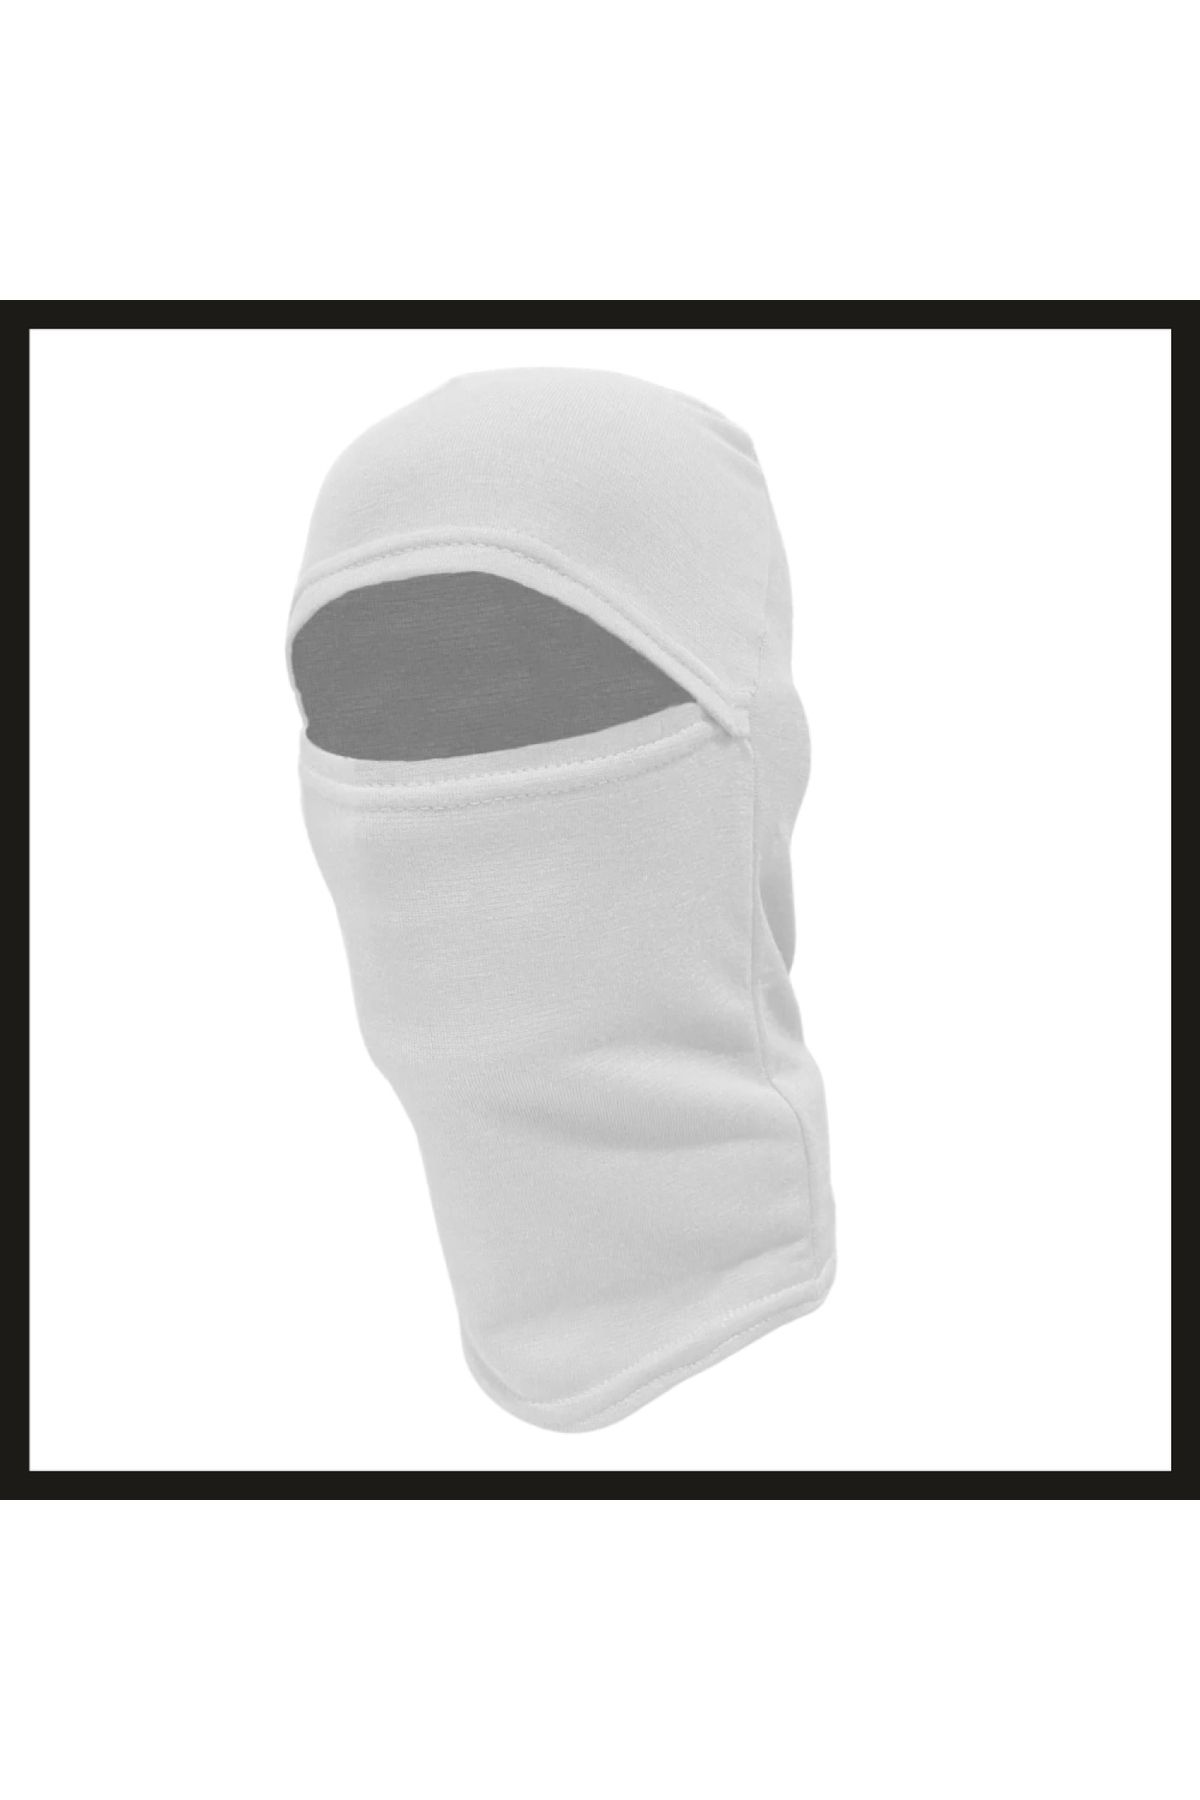 Uygunayakala Uyguna-Yakala Beyaz (mnk.001) Thermo Extra Kar Maskesİ-PKA.012